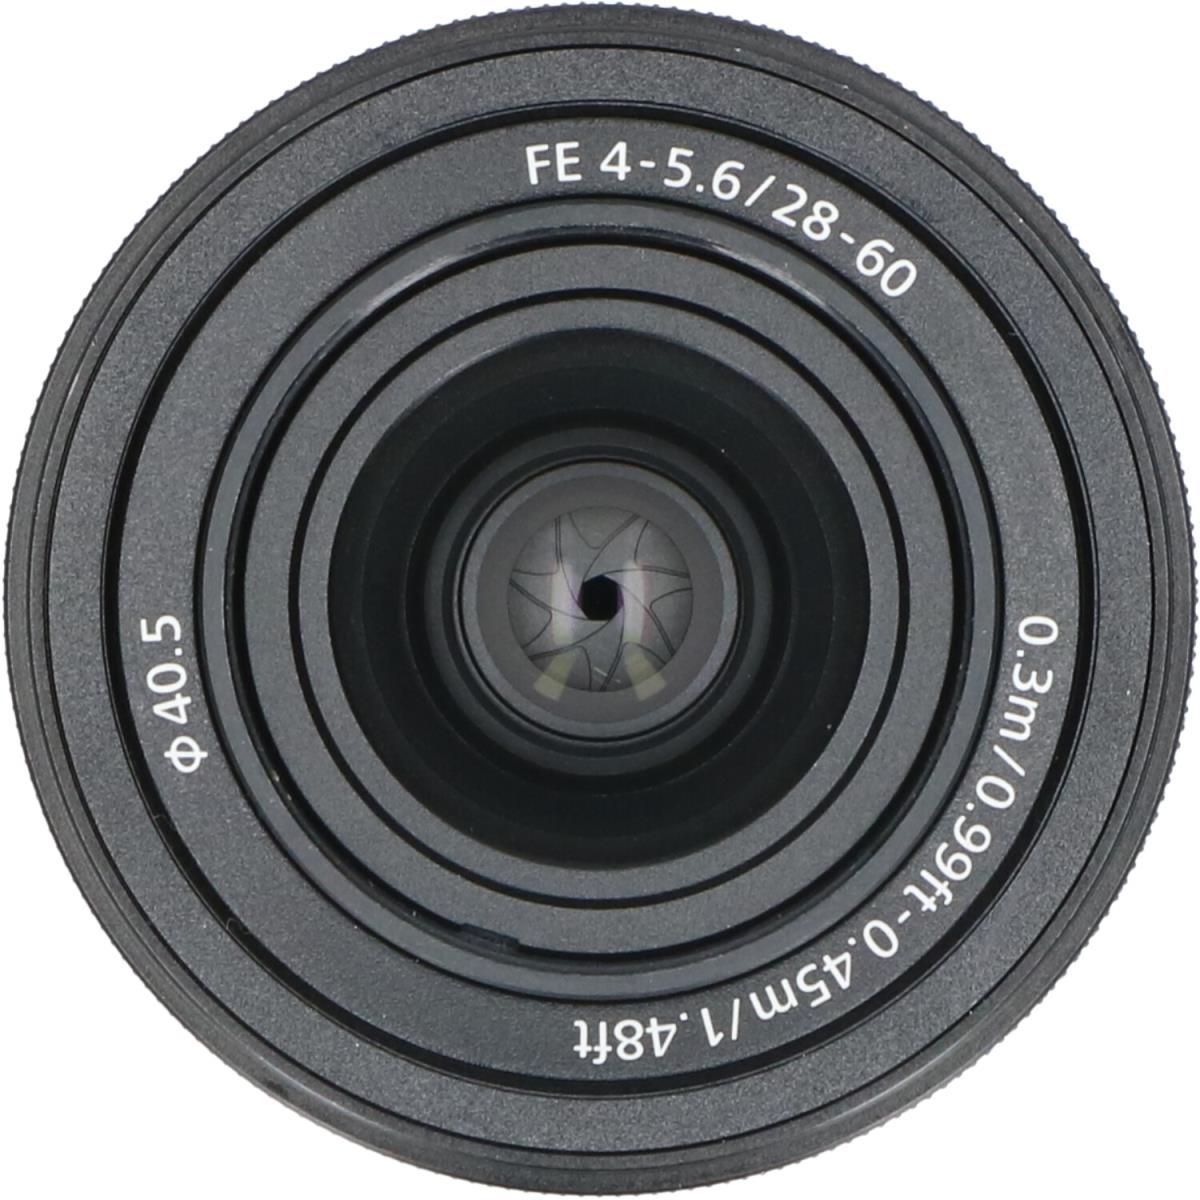 SONY FE28-60mm F4-5.6 SEL2860